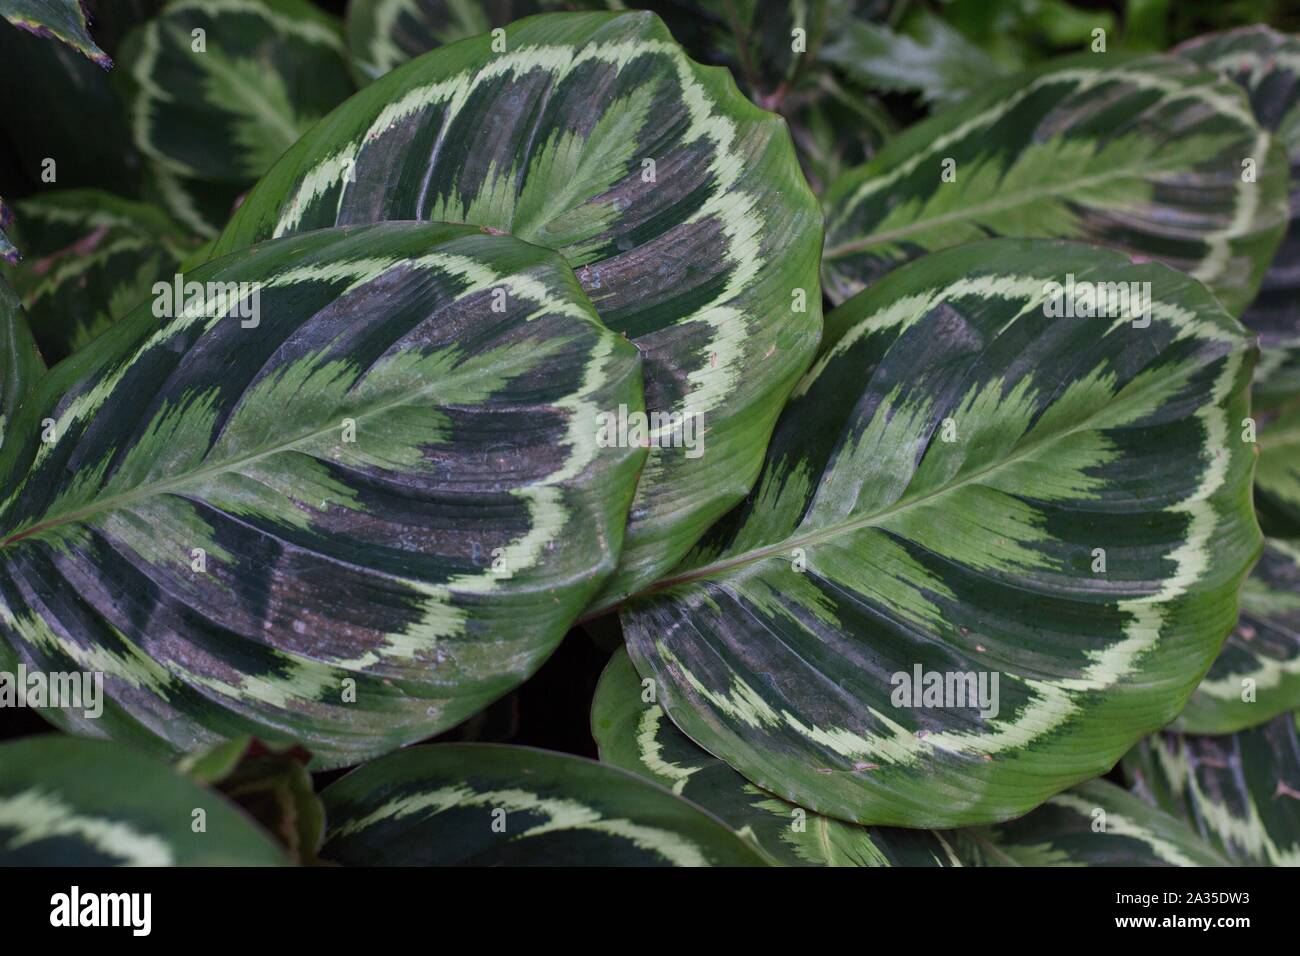 Calathea 'Medallion' plant Stock Photo - Alamy